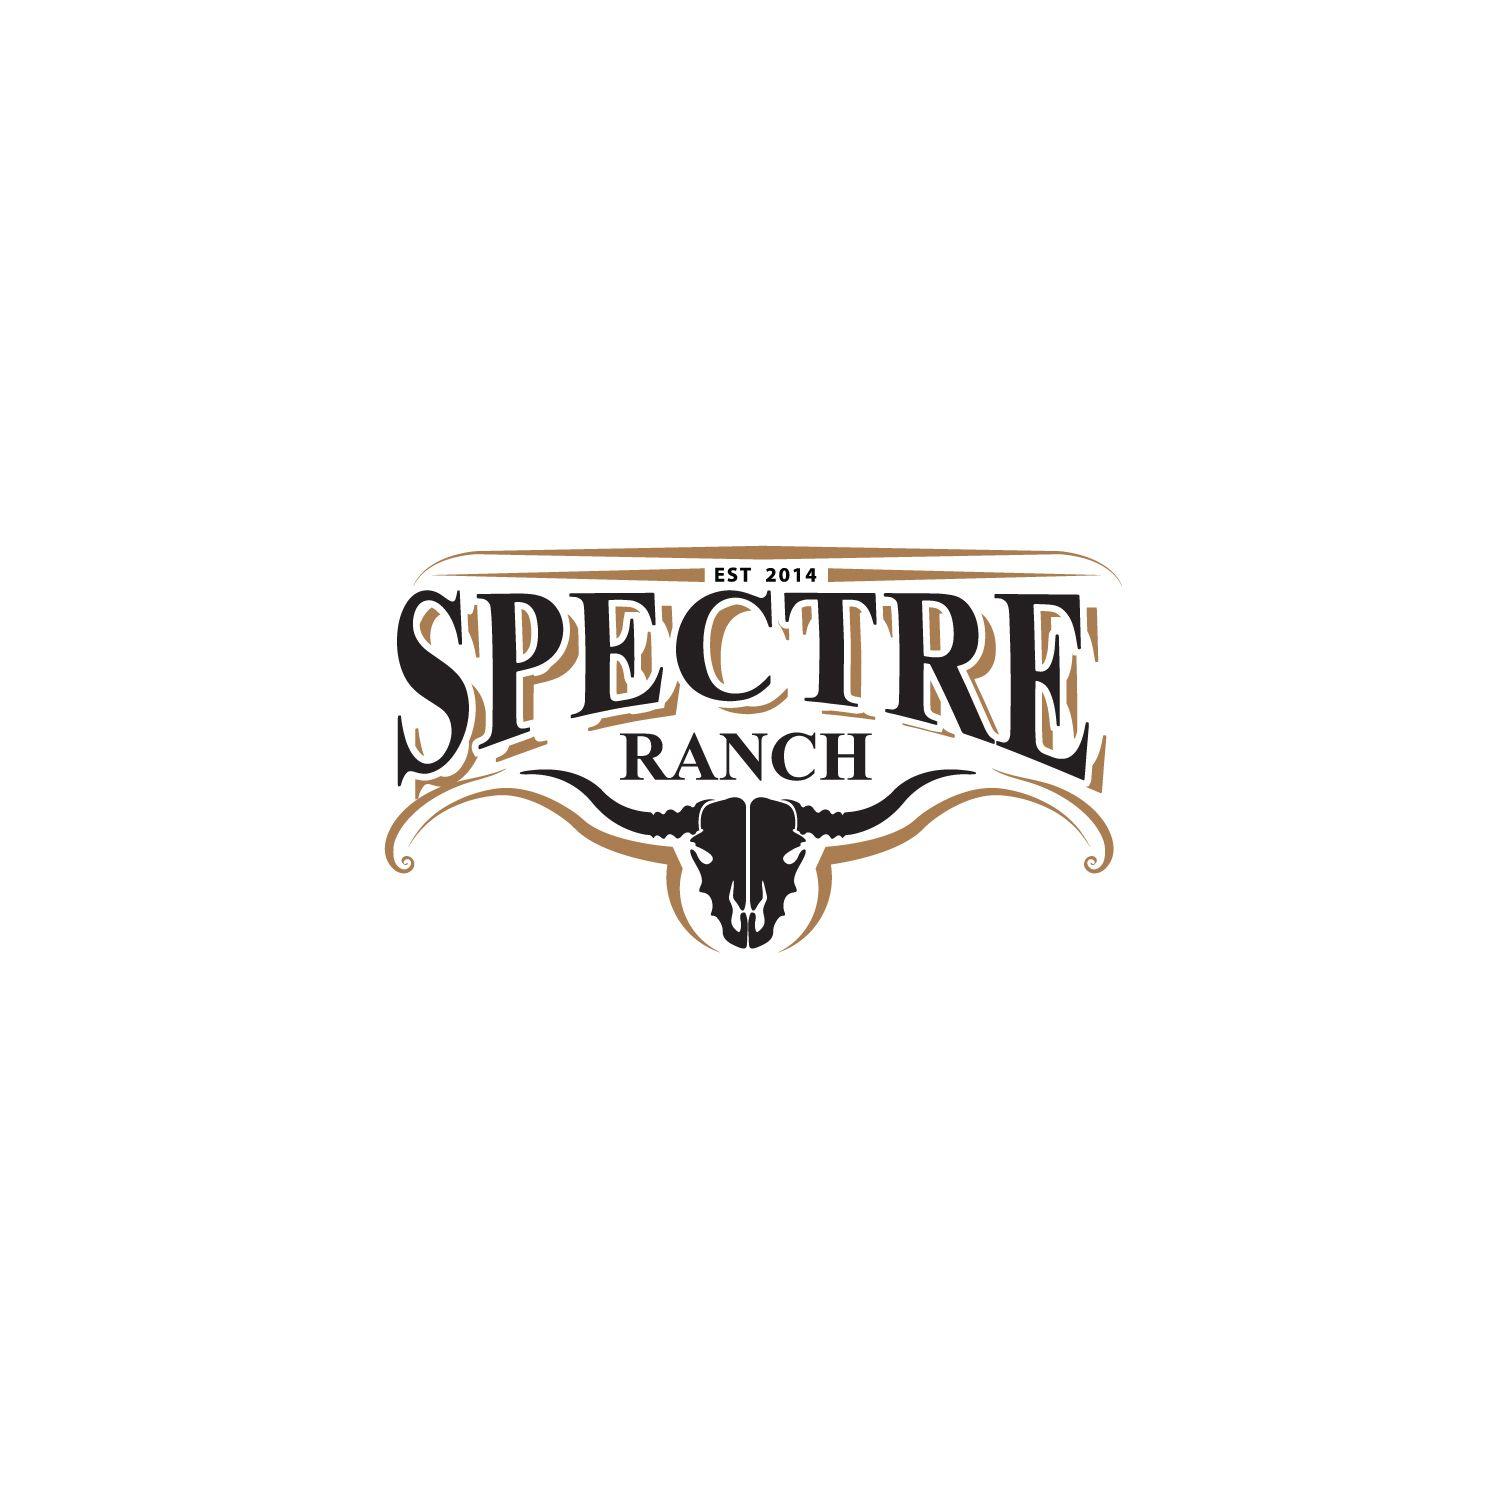 Ranch Logo - Elegant, Playful, Ranch Logo Design for Spectre Ranch